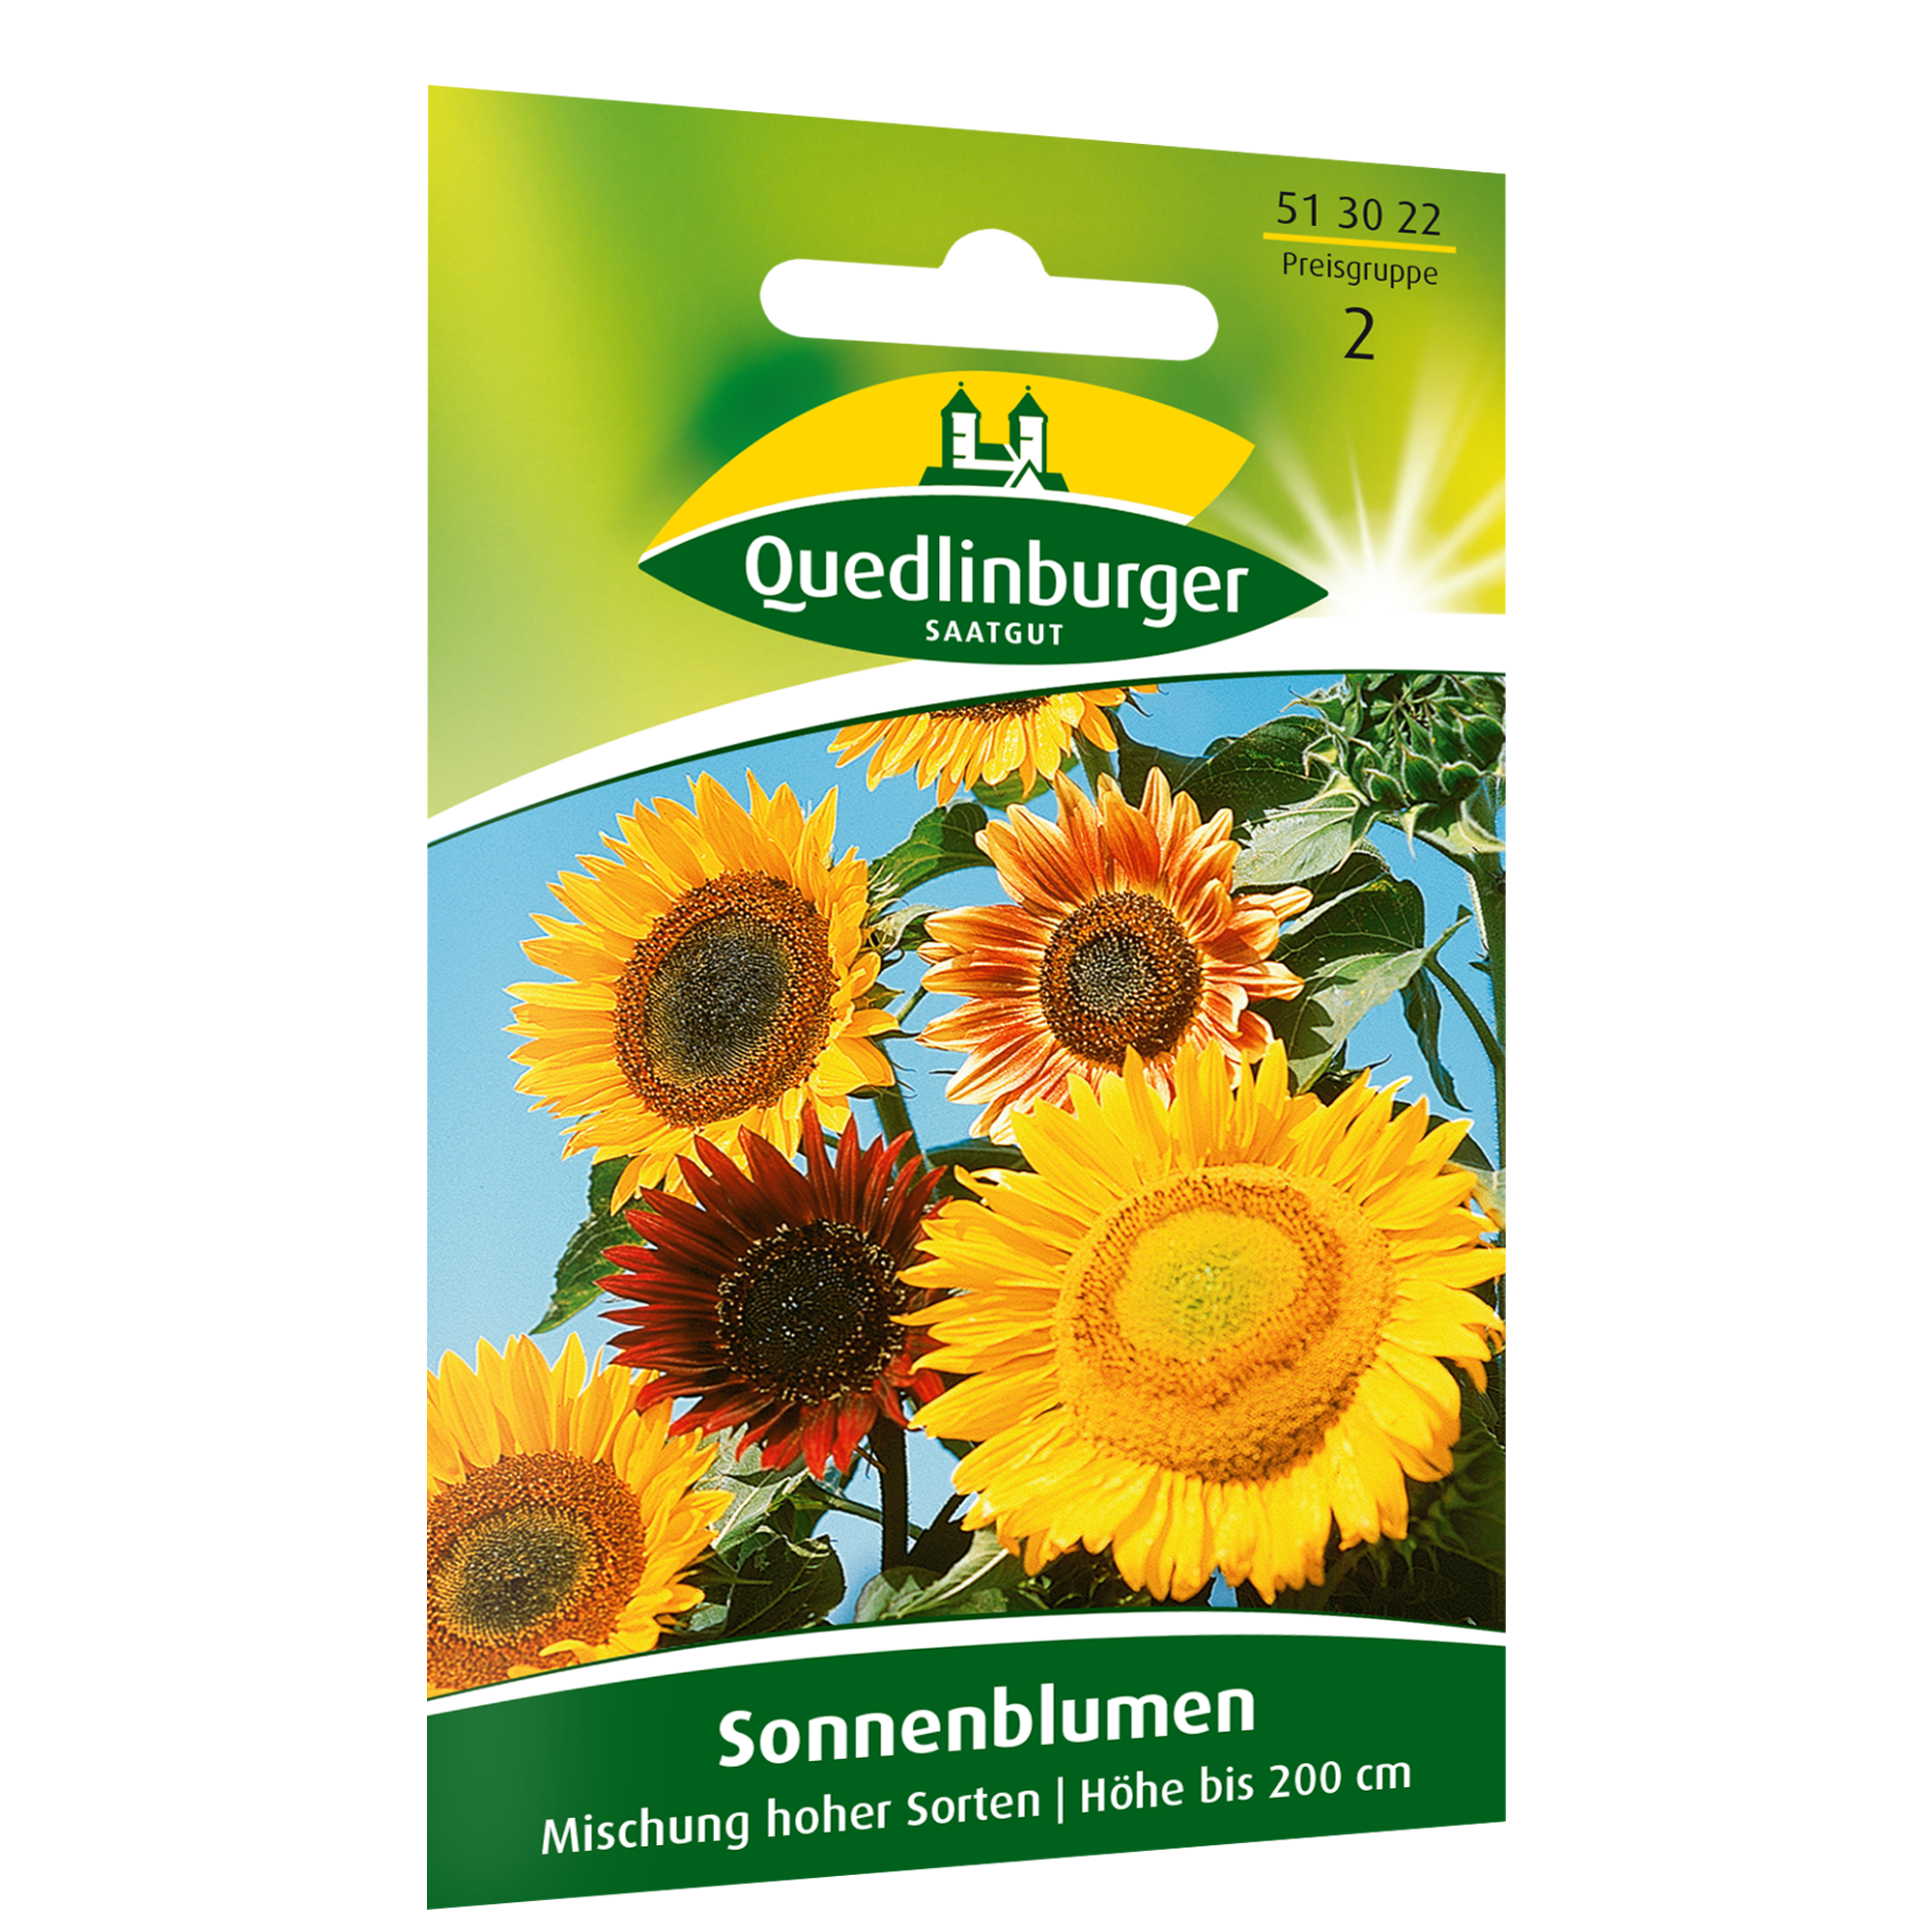 Sonnenblumen hohe Sorten, Mischung + product picture